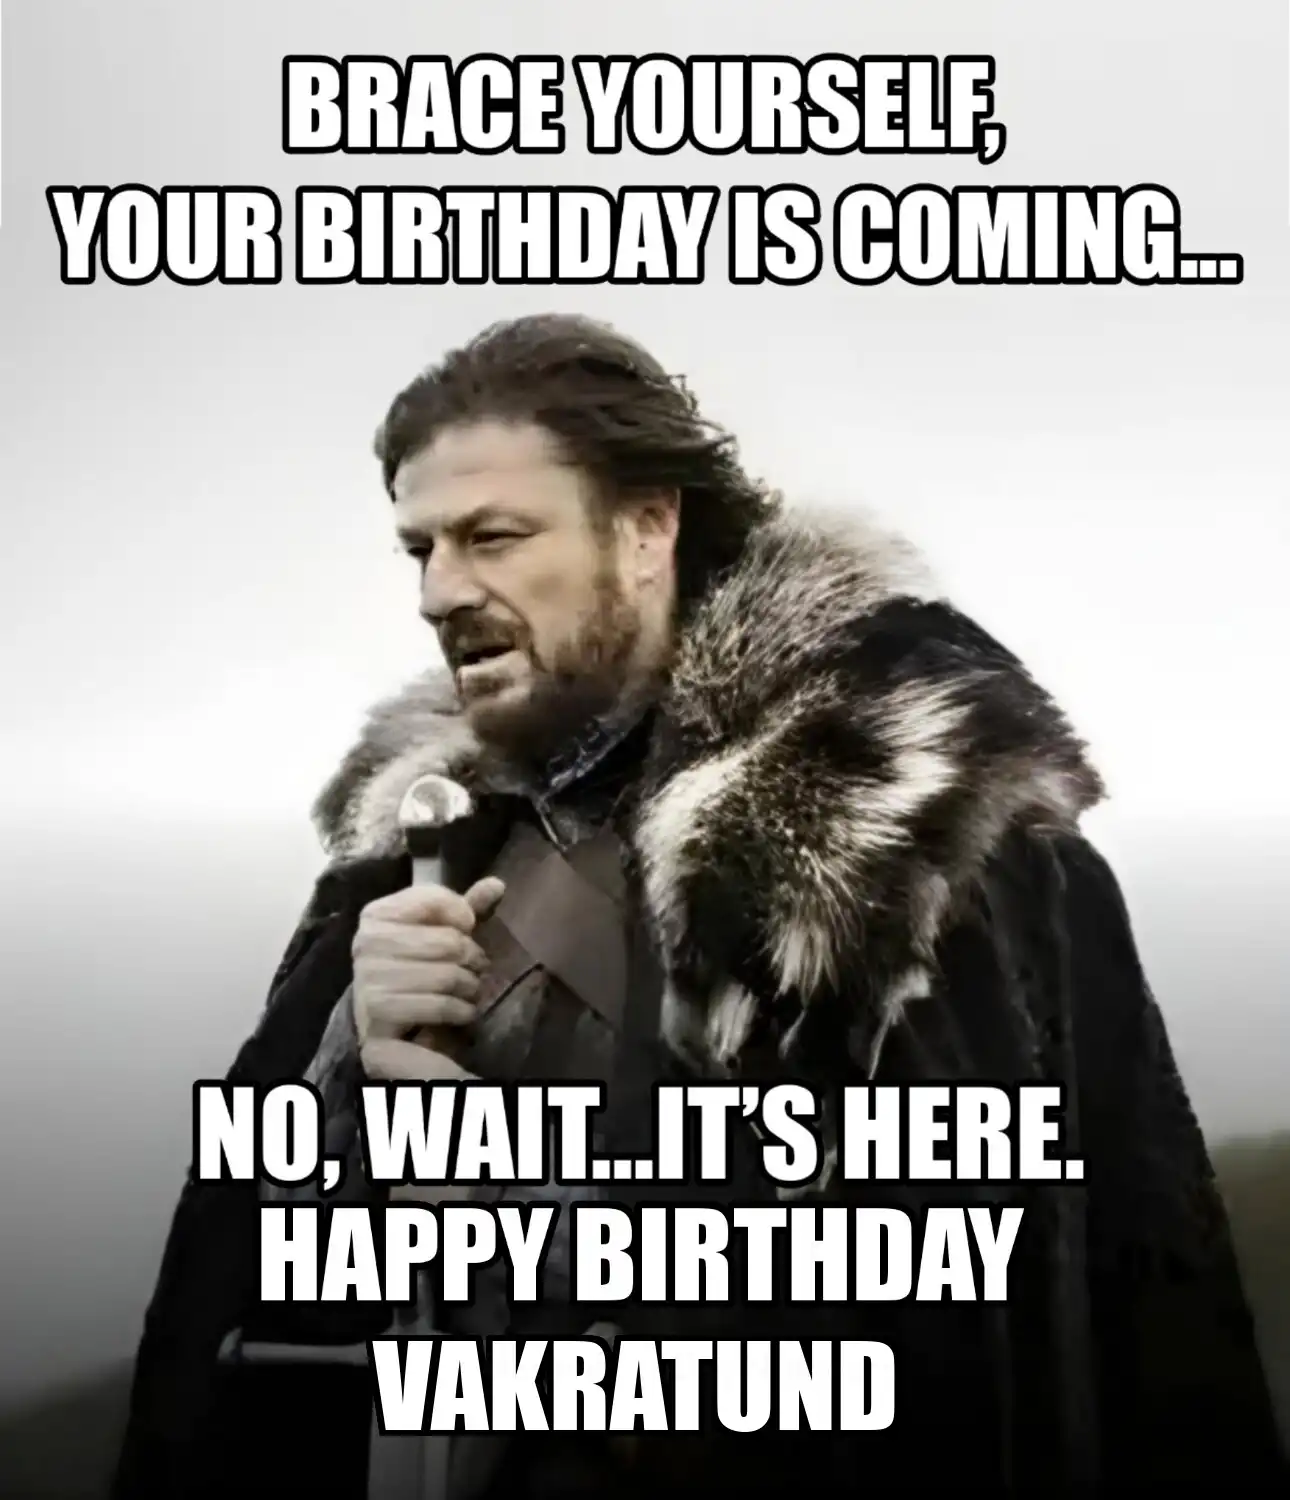 Happy Birthday Vakratund Brace Yourself Your Birthday Is Coming Meme